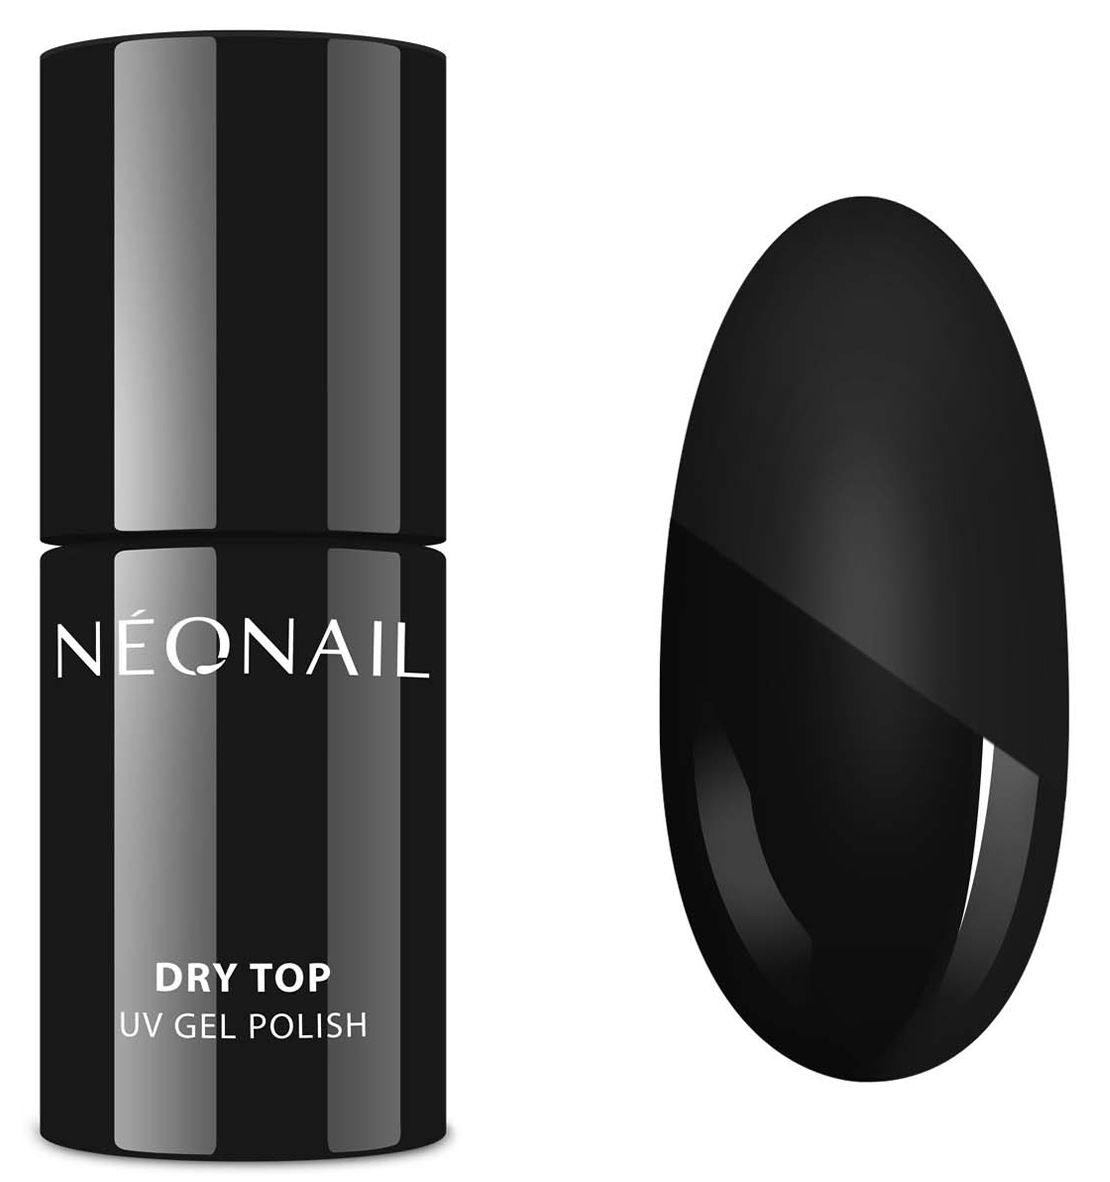 Neonail Dry Top верхнее покрытие для ногтей, 7.2 ml